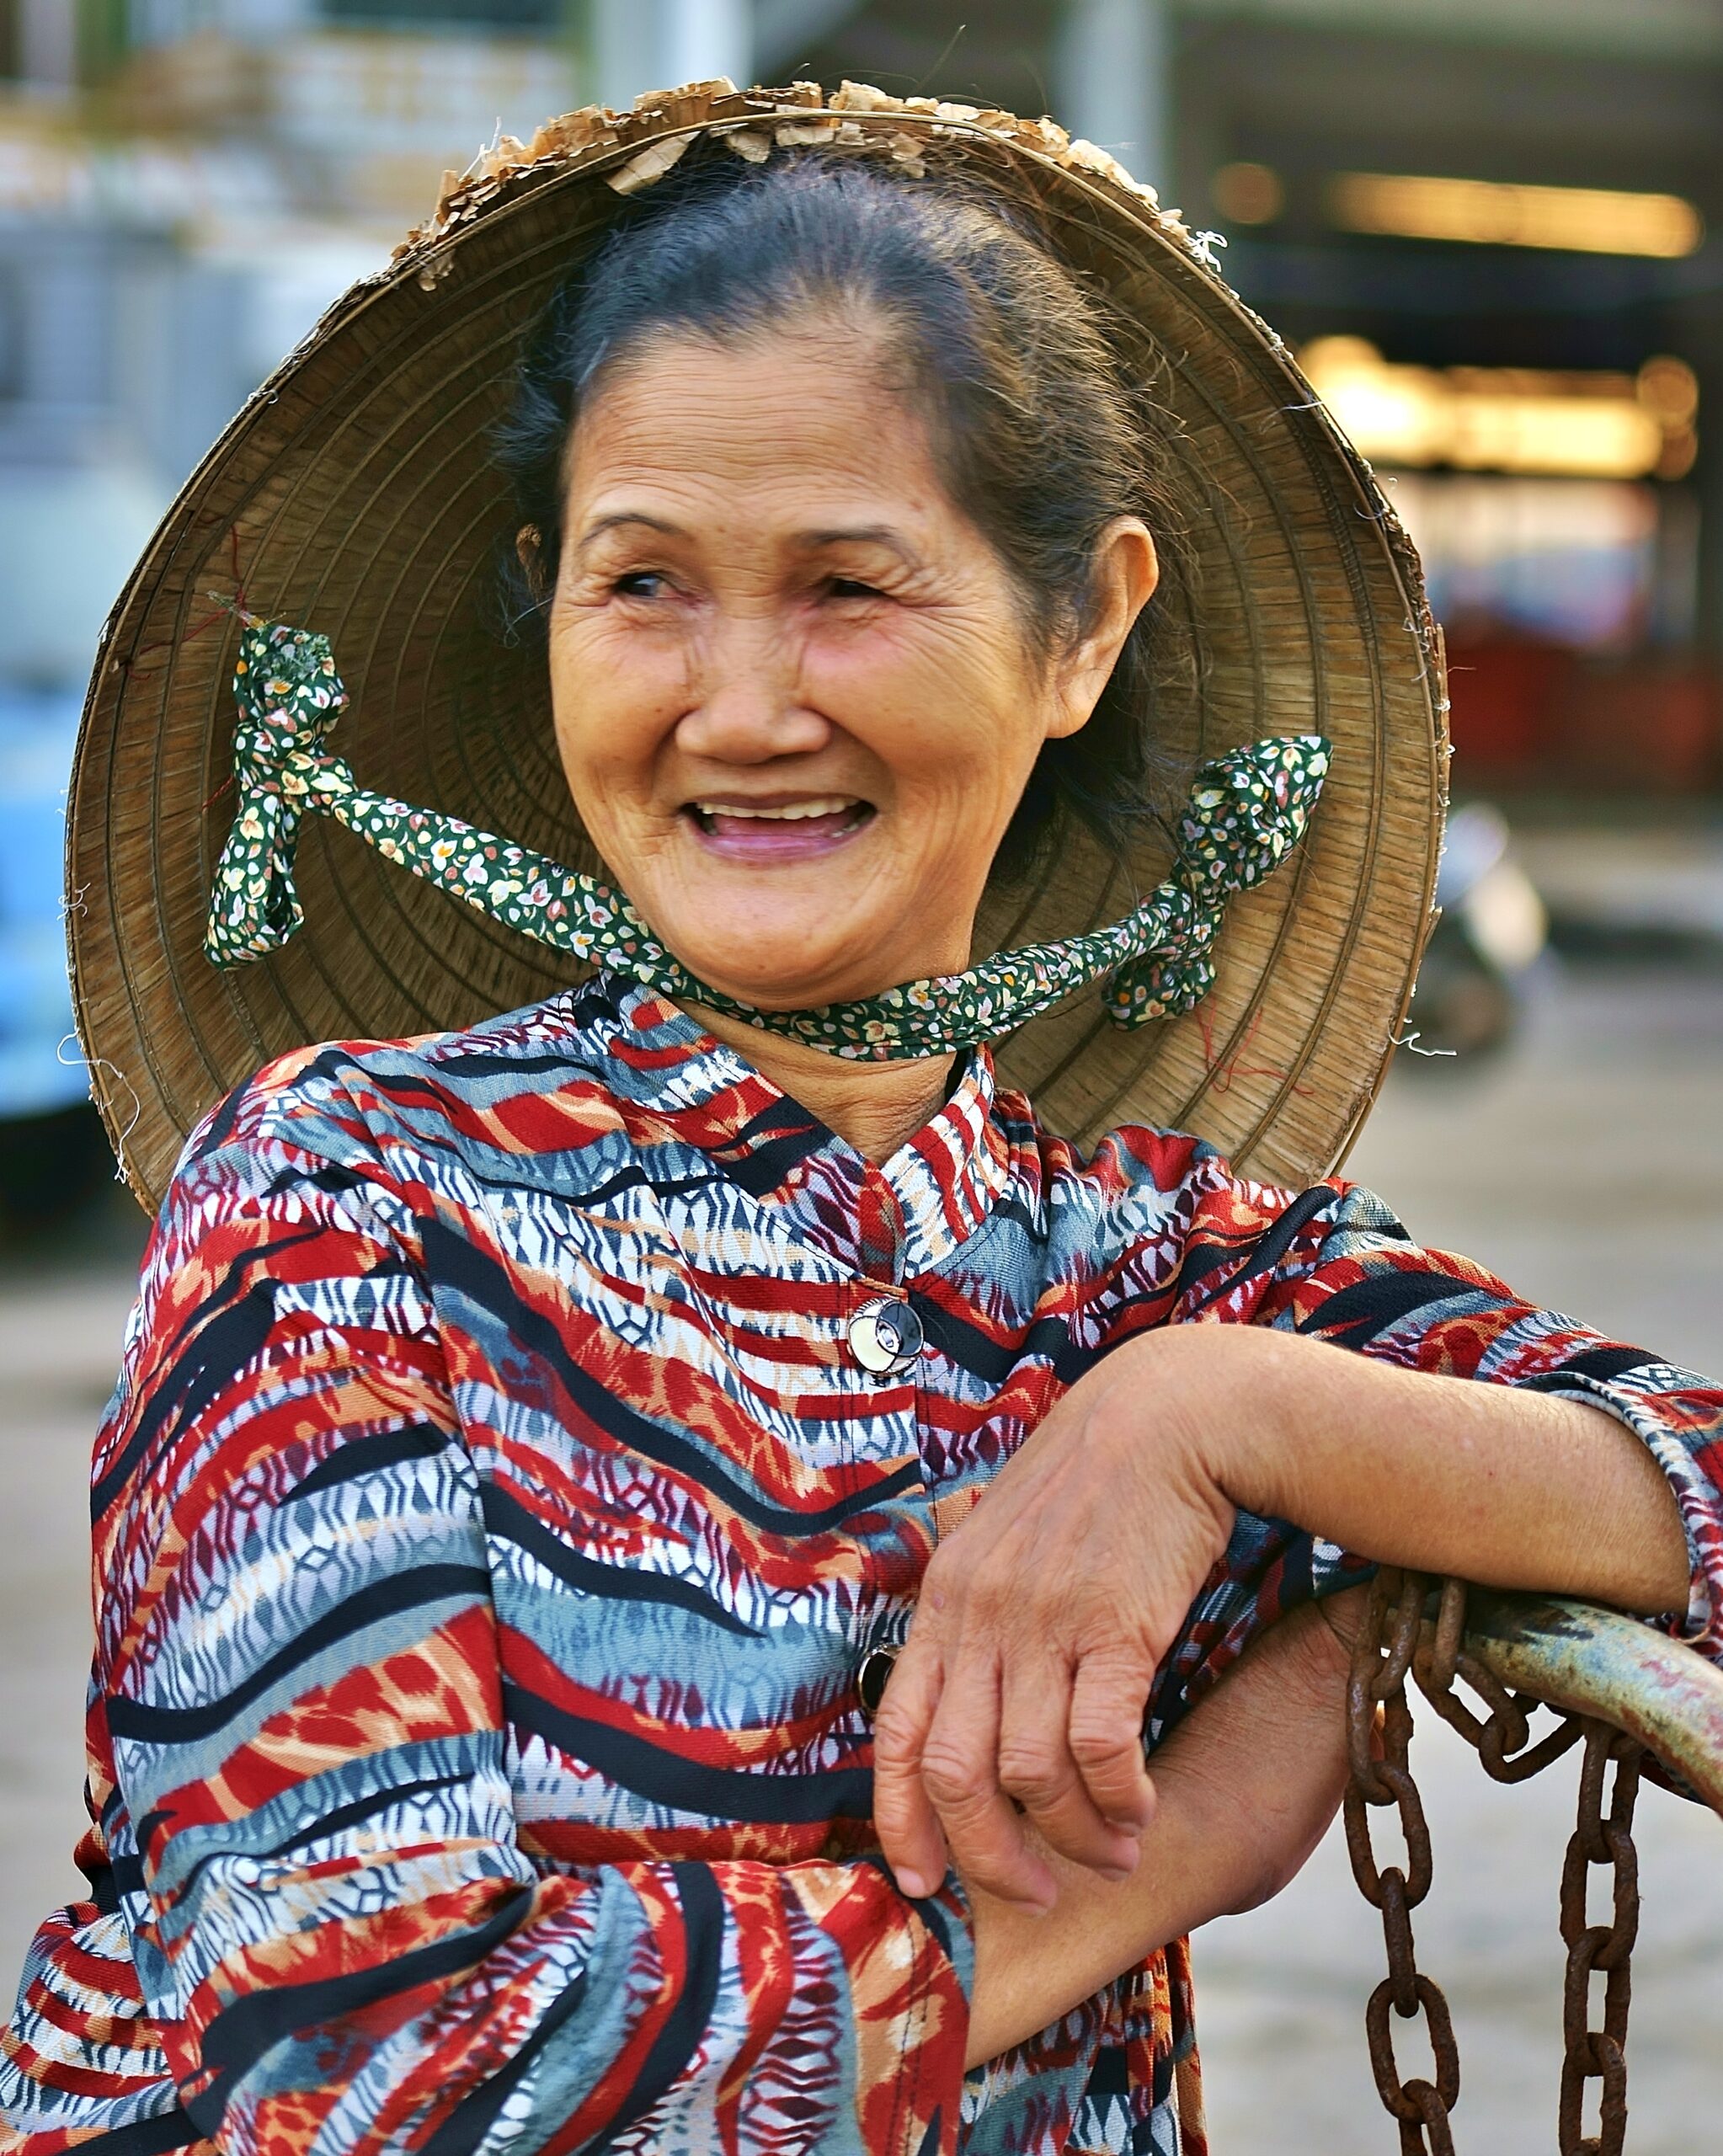 Vietnamese smile - fisherman's simple happiness from fish market, Nha Trang, Vietnam